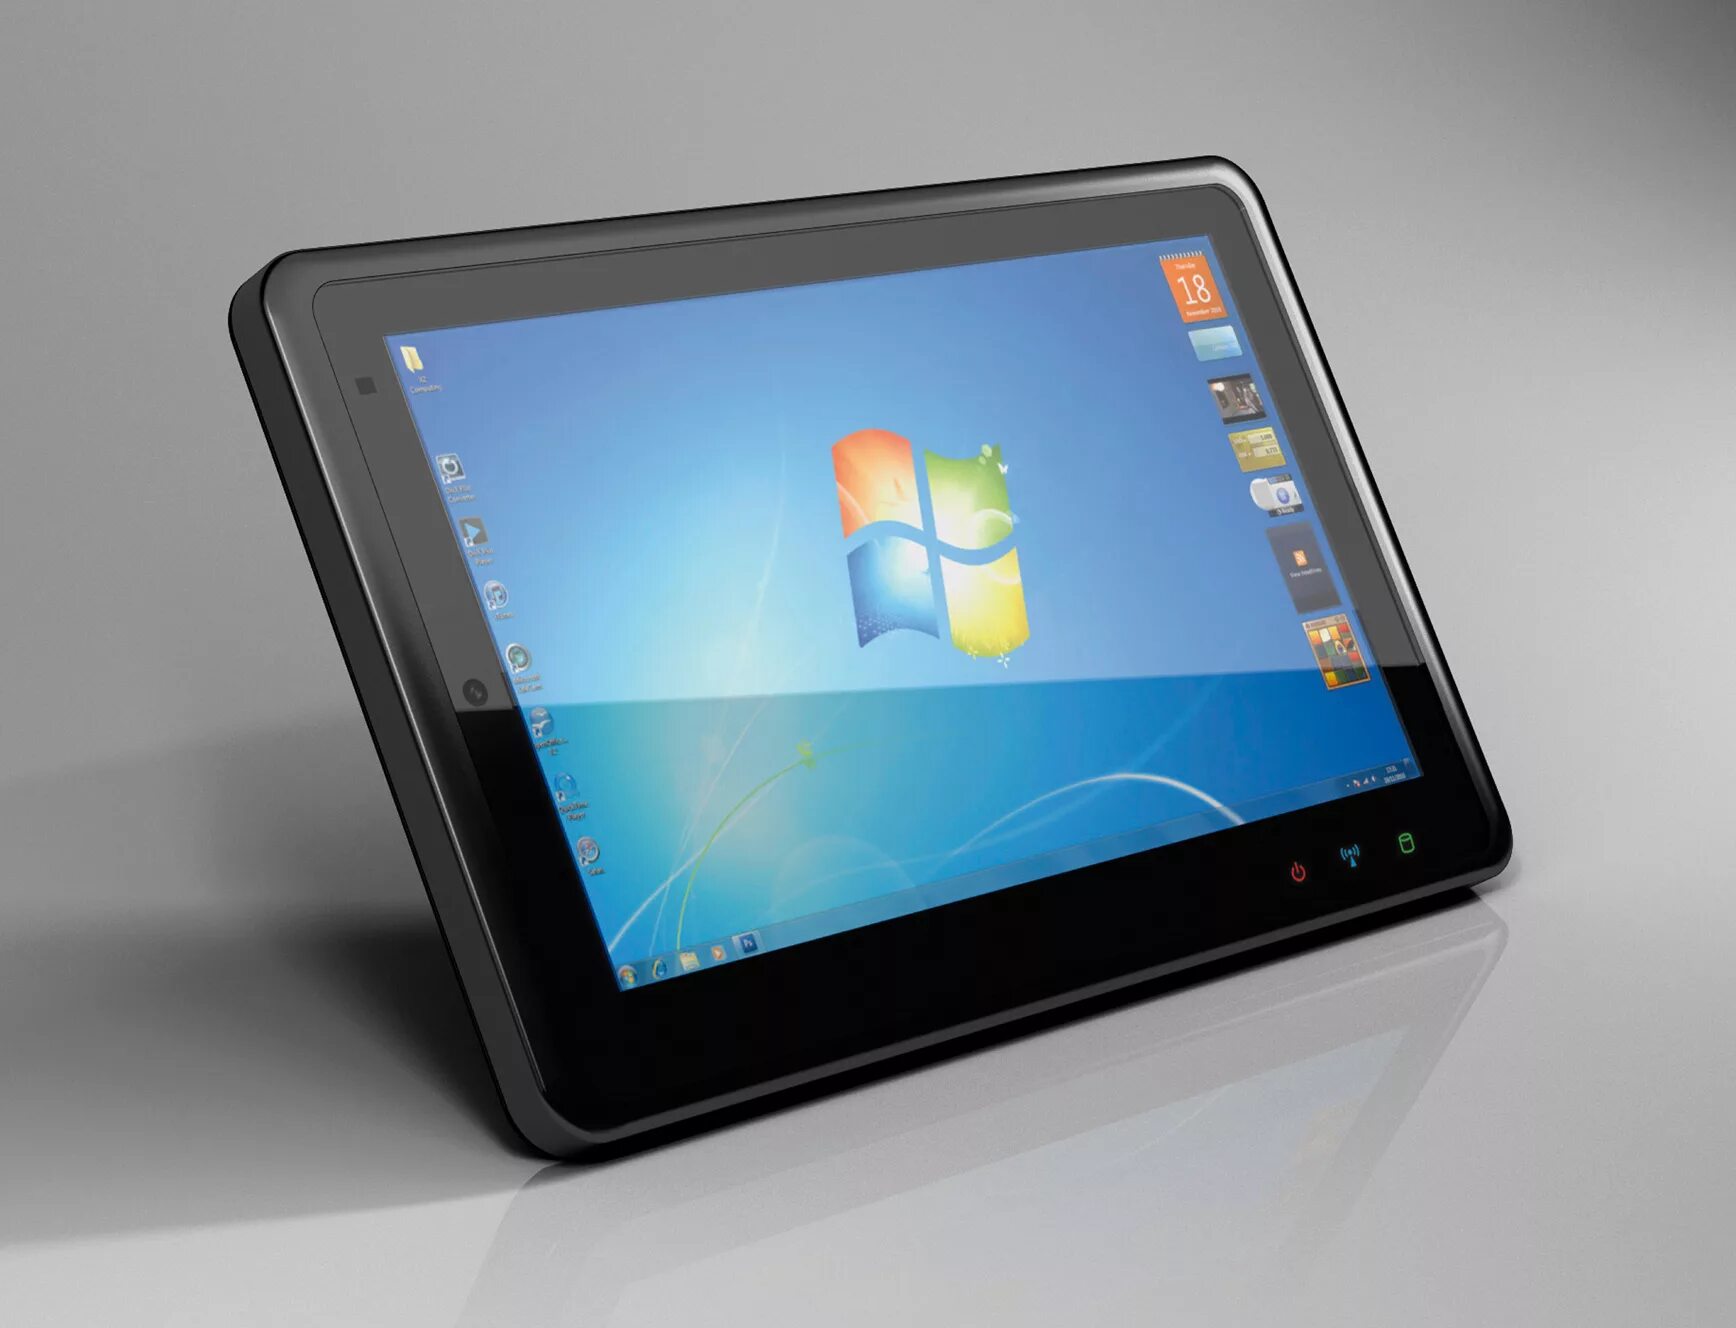 Ест планшет. А105 Tablet PC планшет. Windows 7 Tablet PC. Tablet PC 2002. Майкрософт планшет виндовс 7.